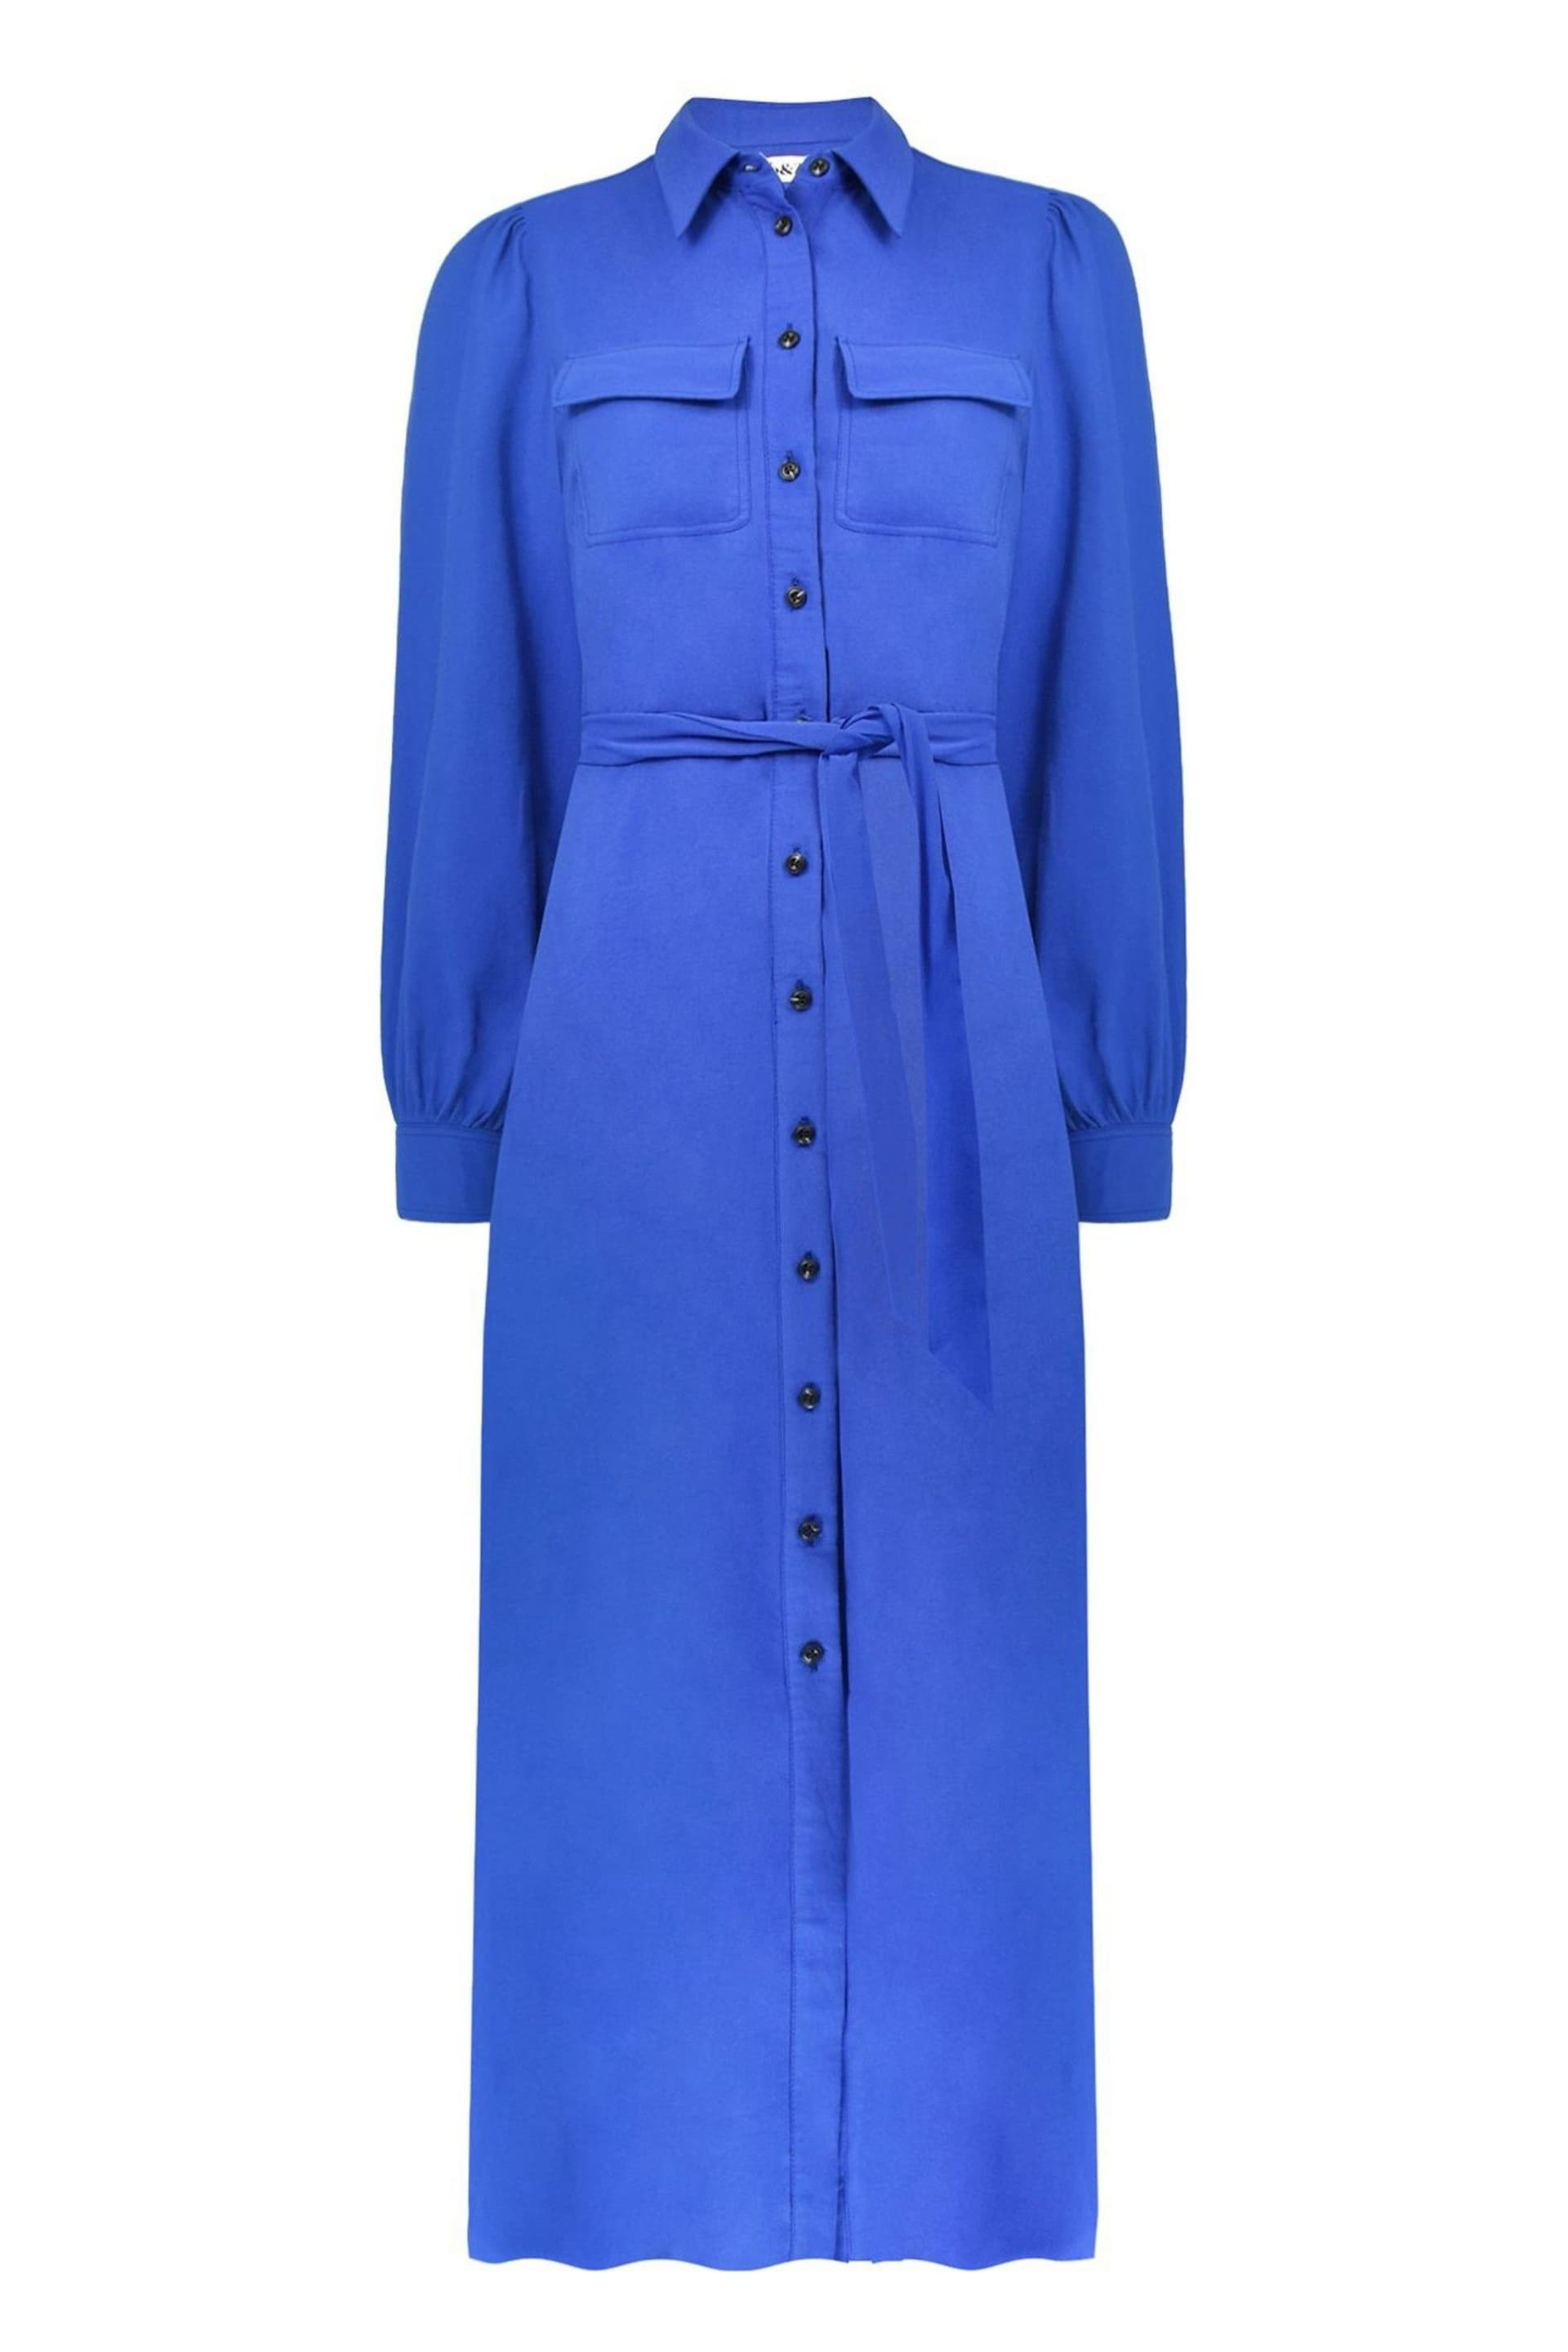 Ro&Zo Blue Petite Pocket Detail Midi Shirt Dress - Image 5 of 6